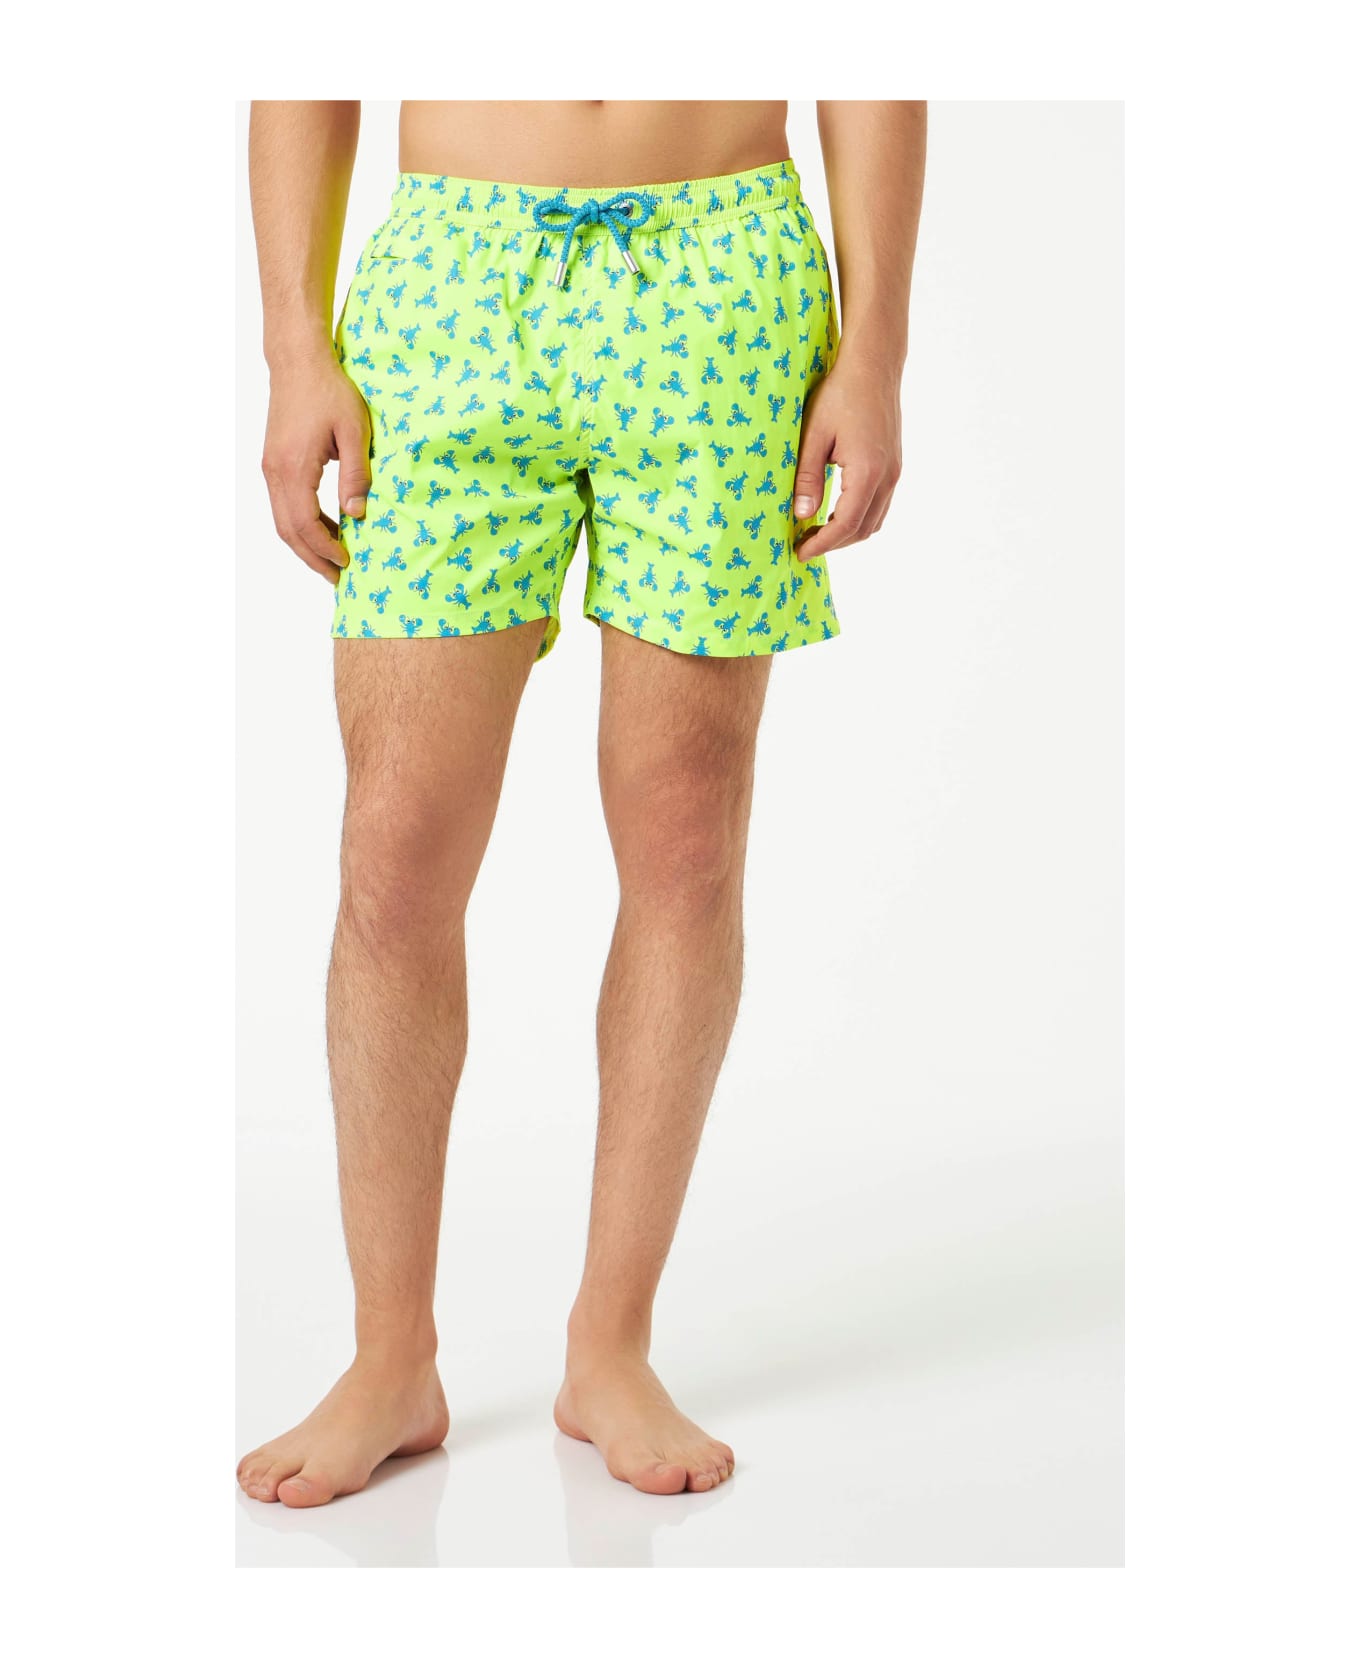 MC2 Saint Barth Man Light Fabric Comfort Swim Shorts With Lobster Print - YELLOW